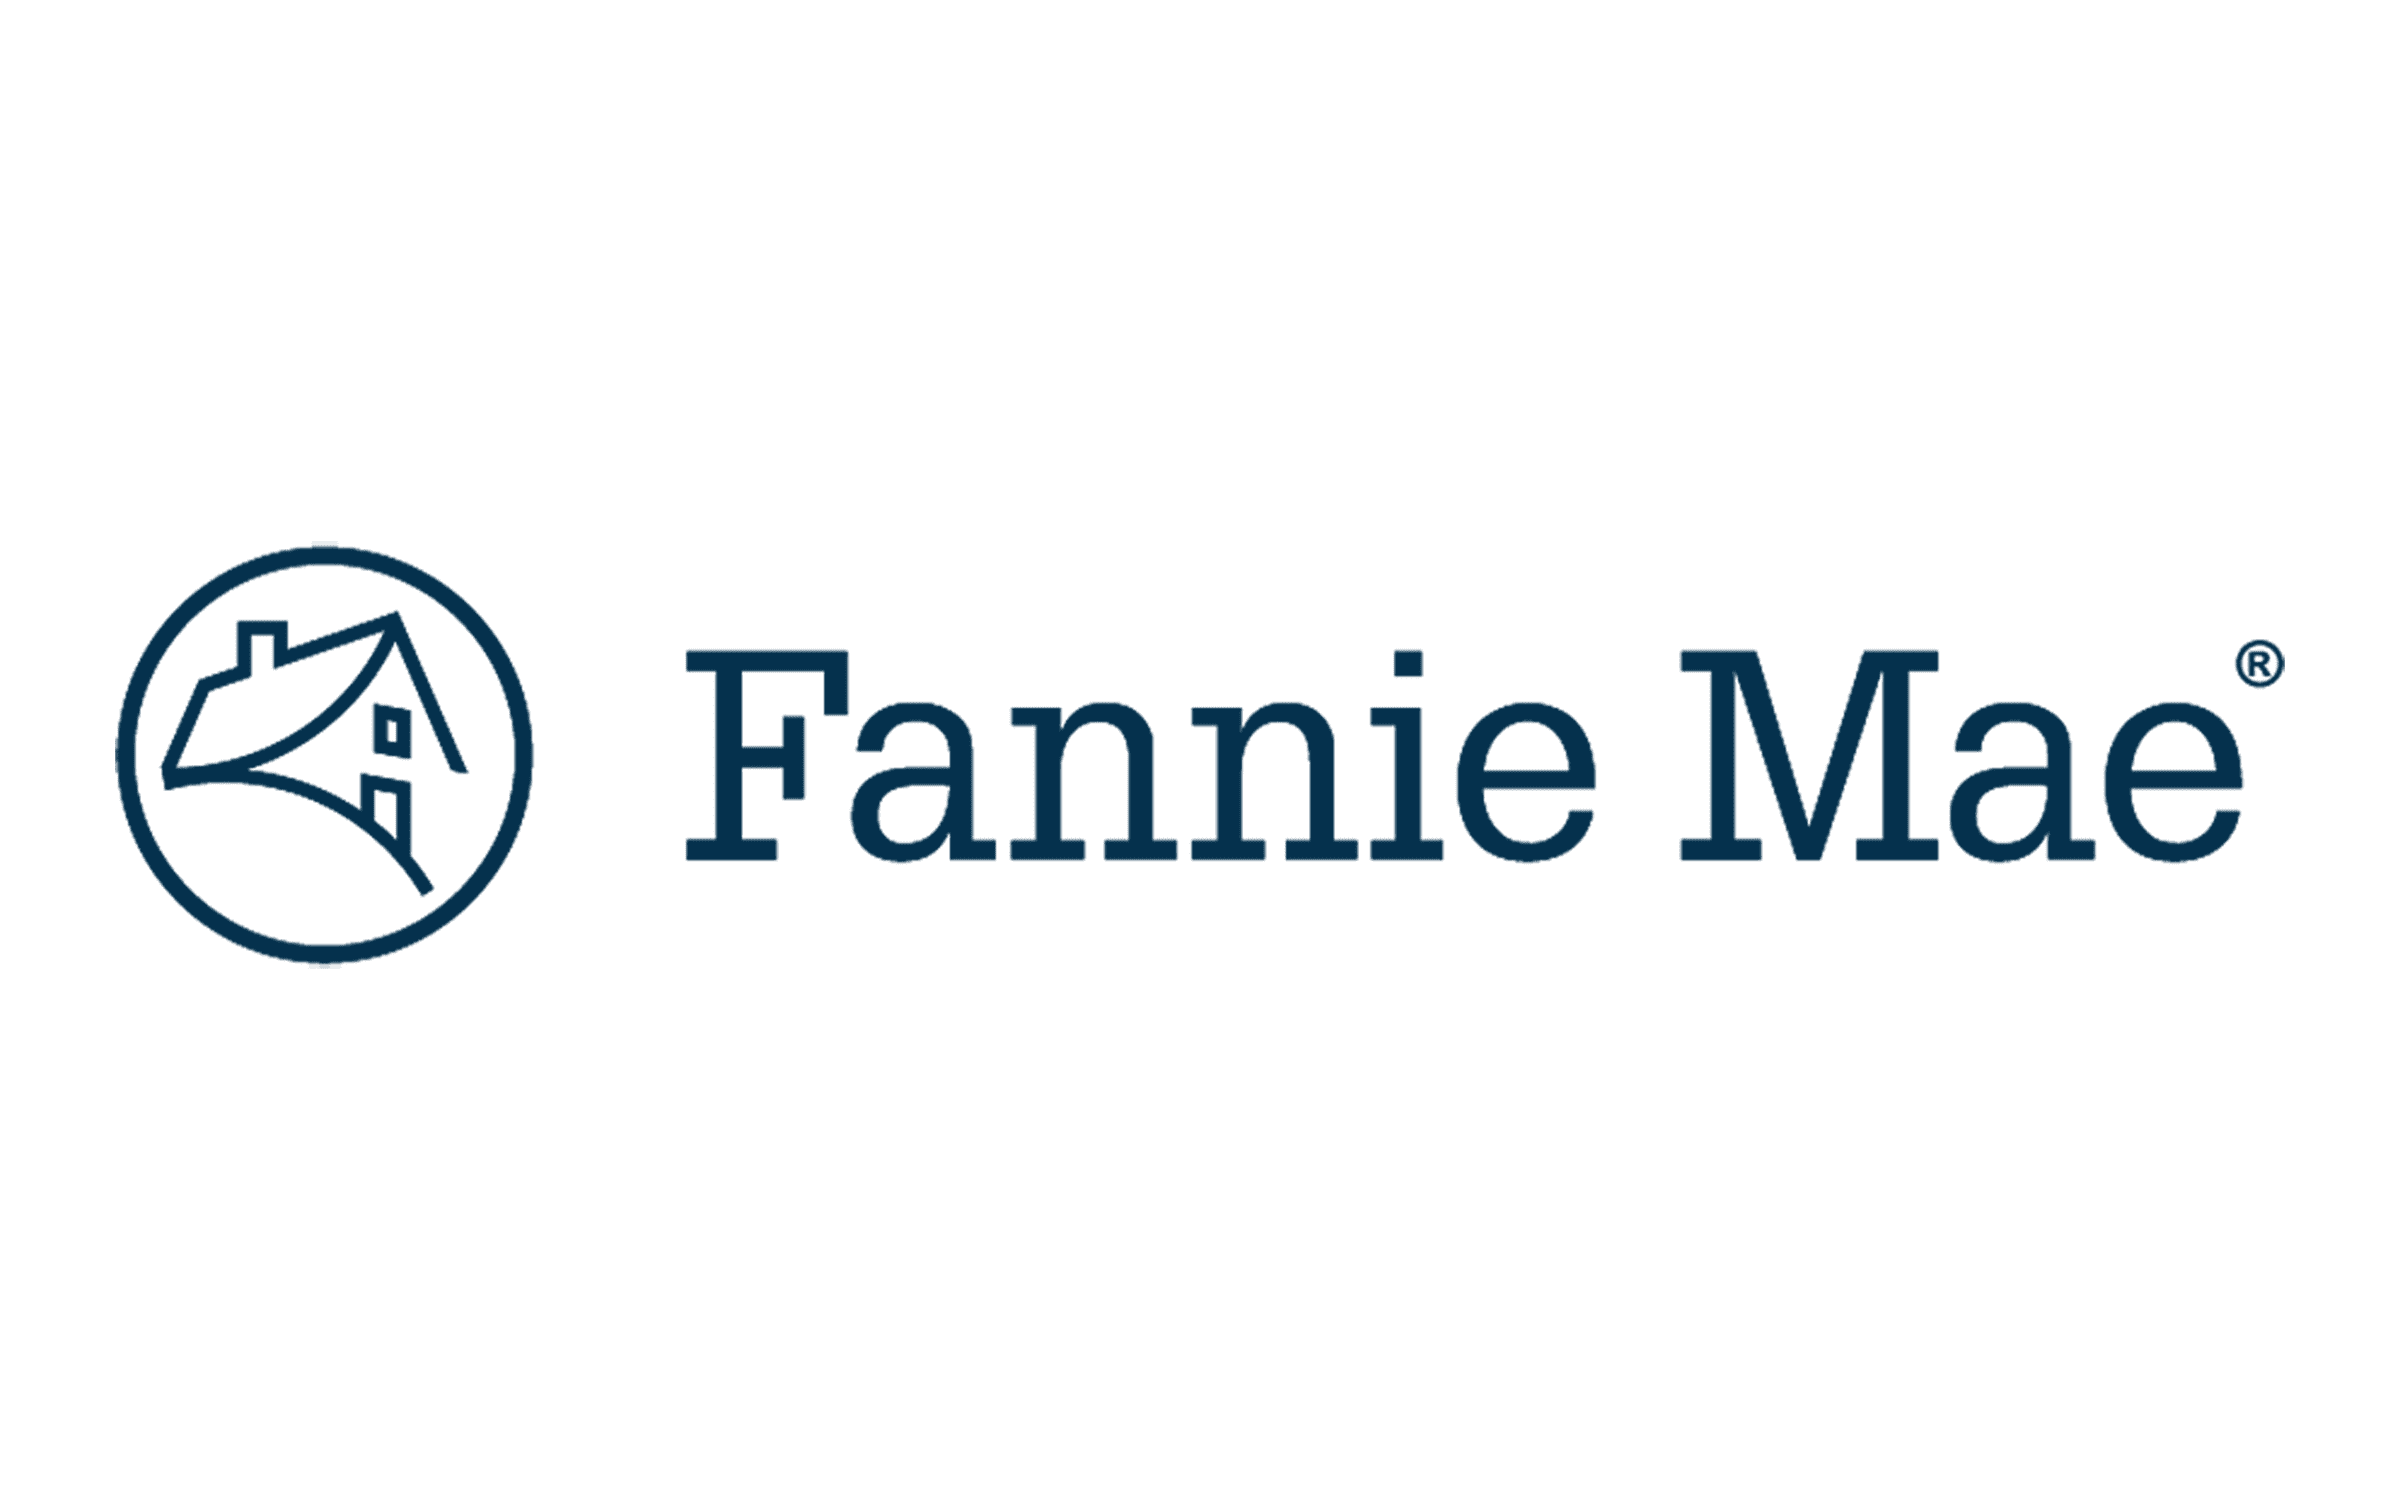 FannieMae